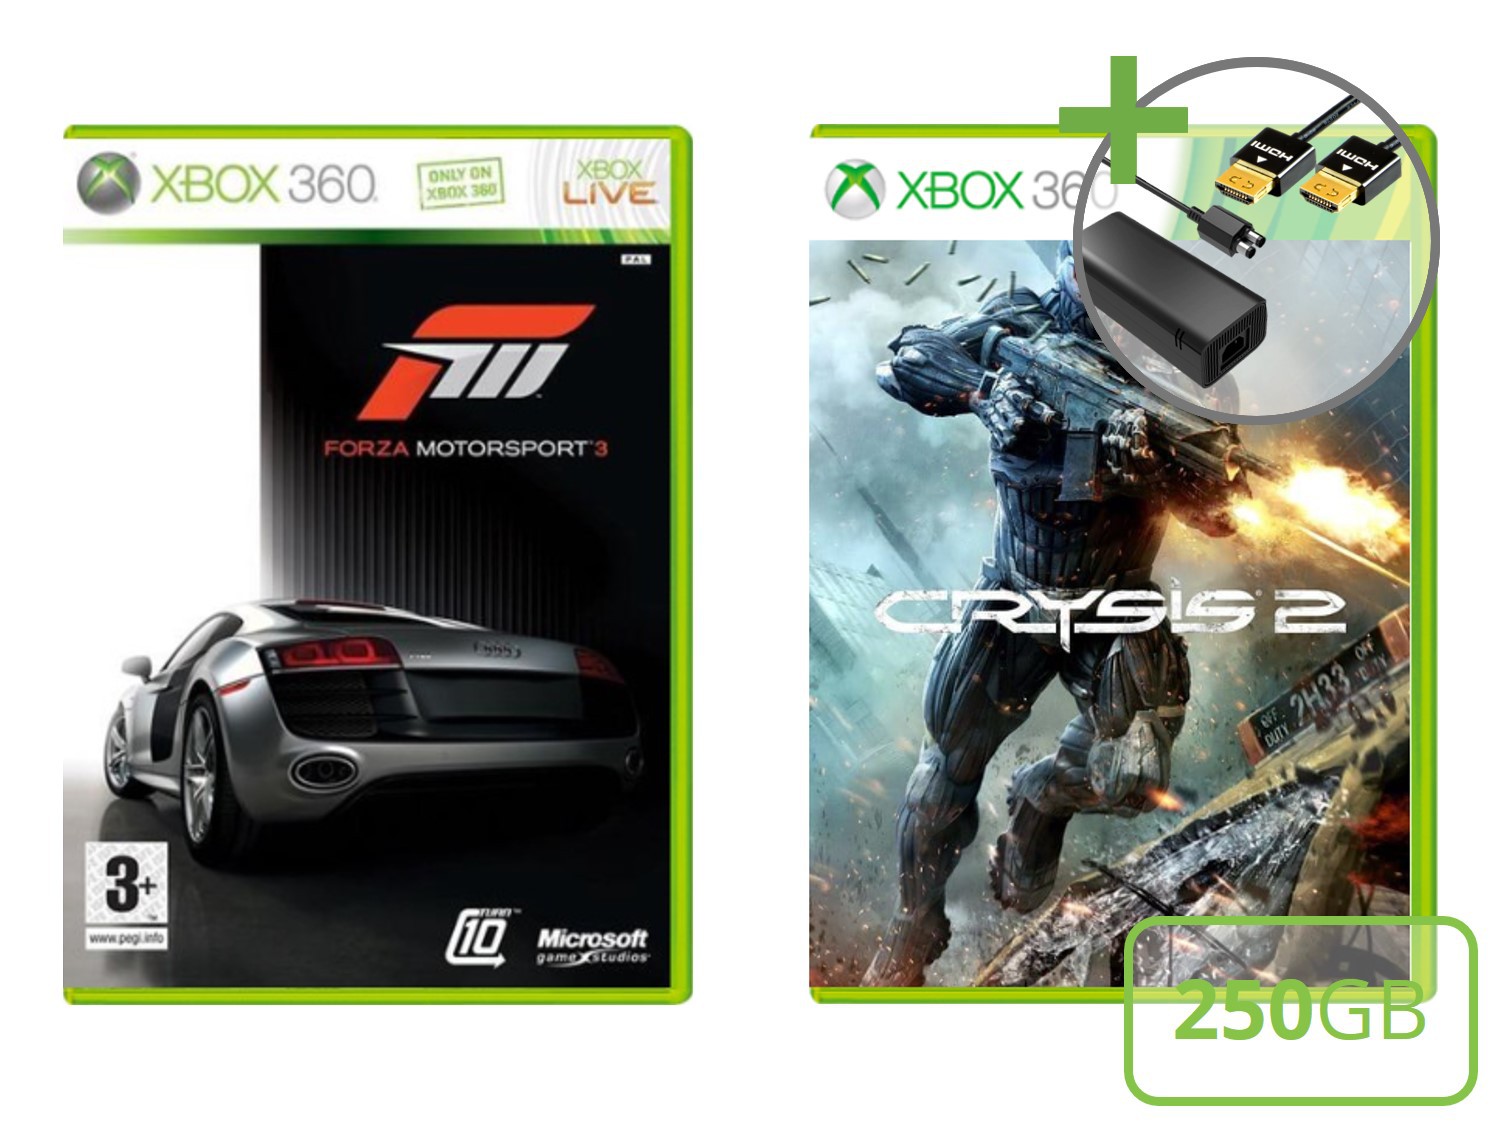 Microsoft Xbox 360 Slim Starter Pack - Forza 3 and Crisis 2 Edition - Xbox 360 Hardware - 5